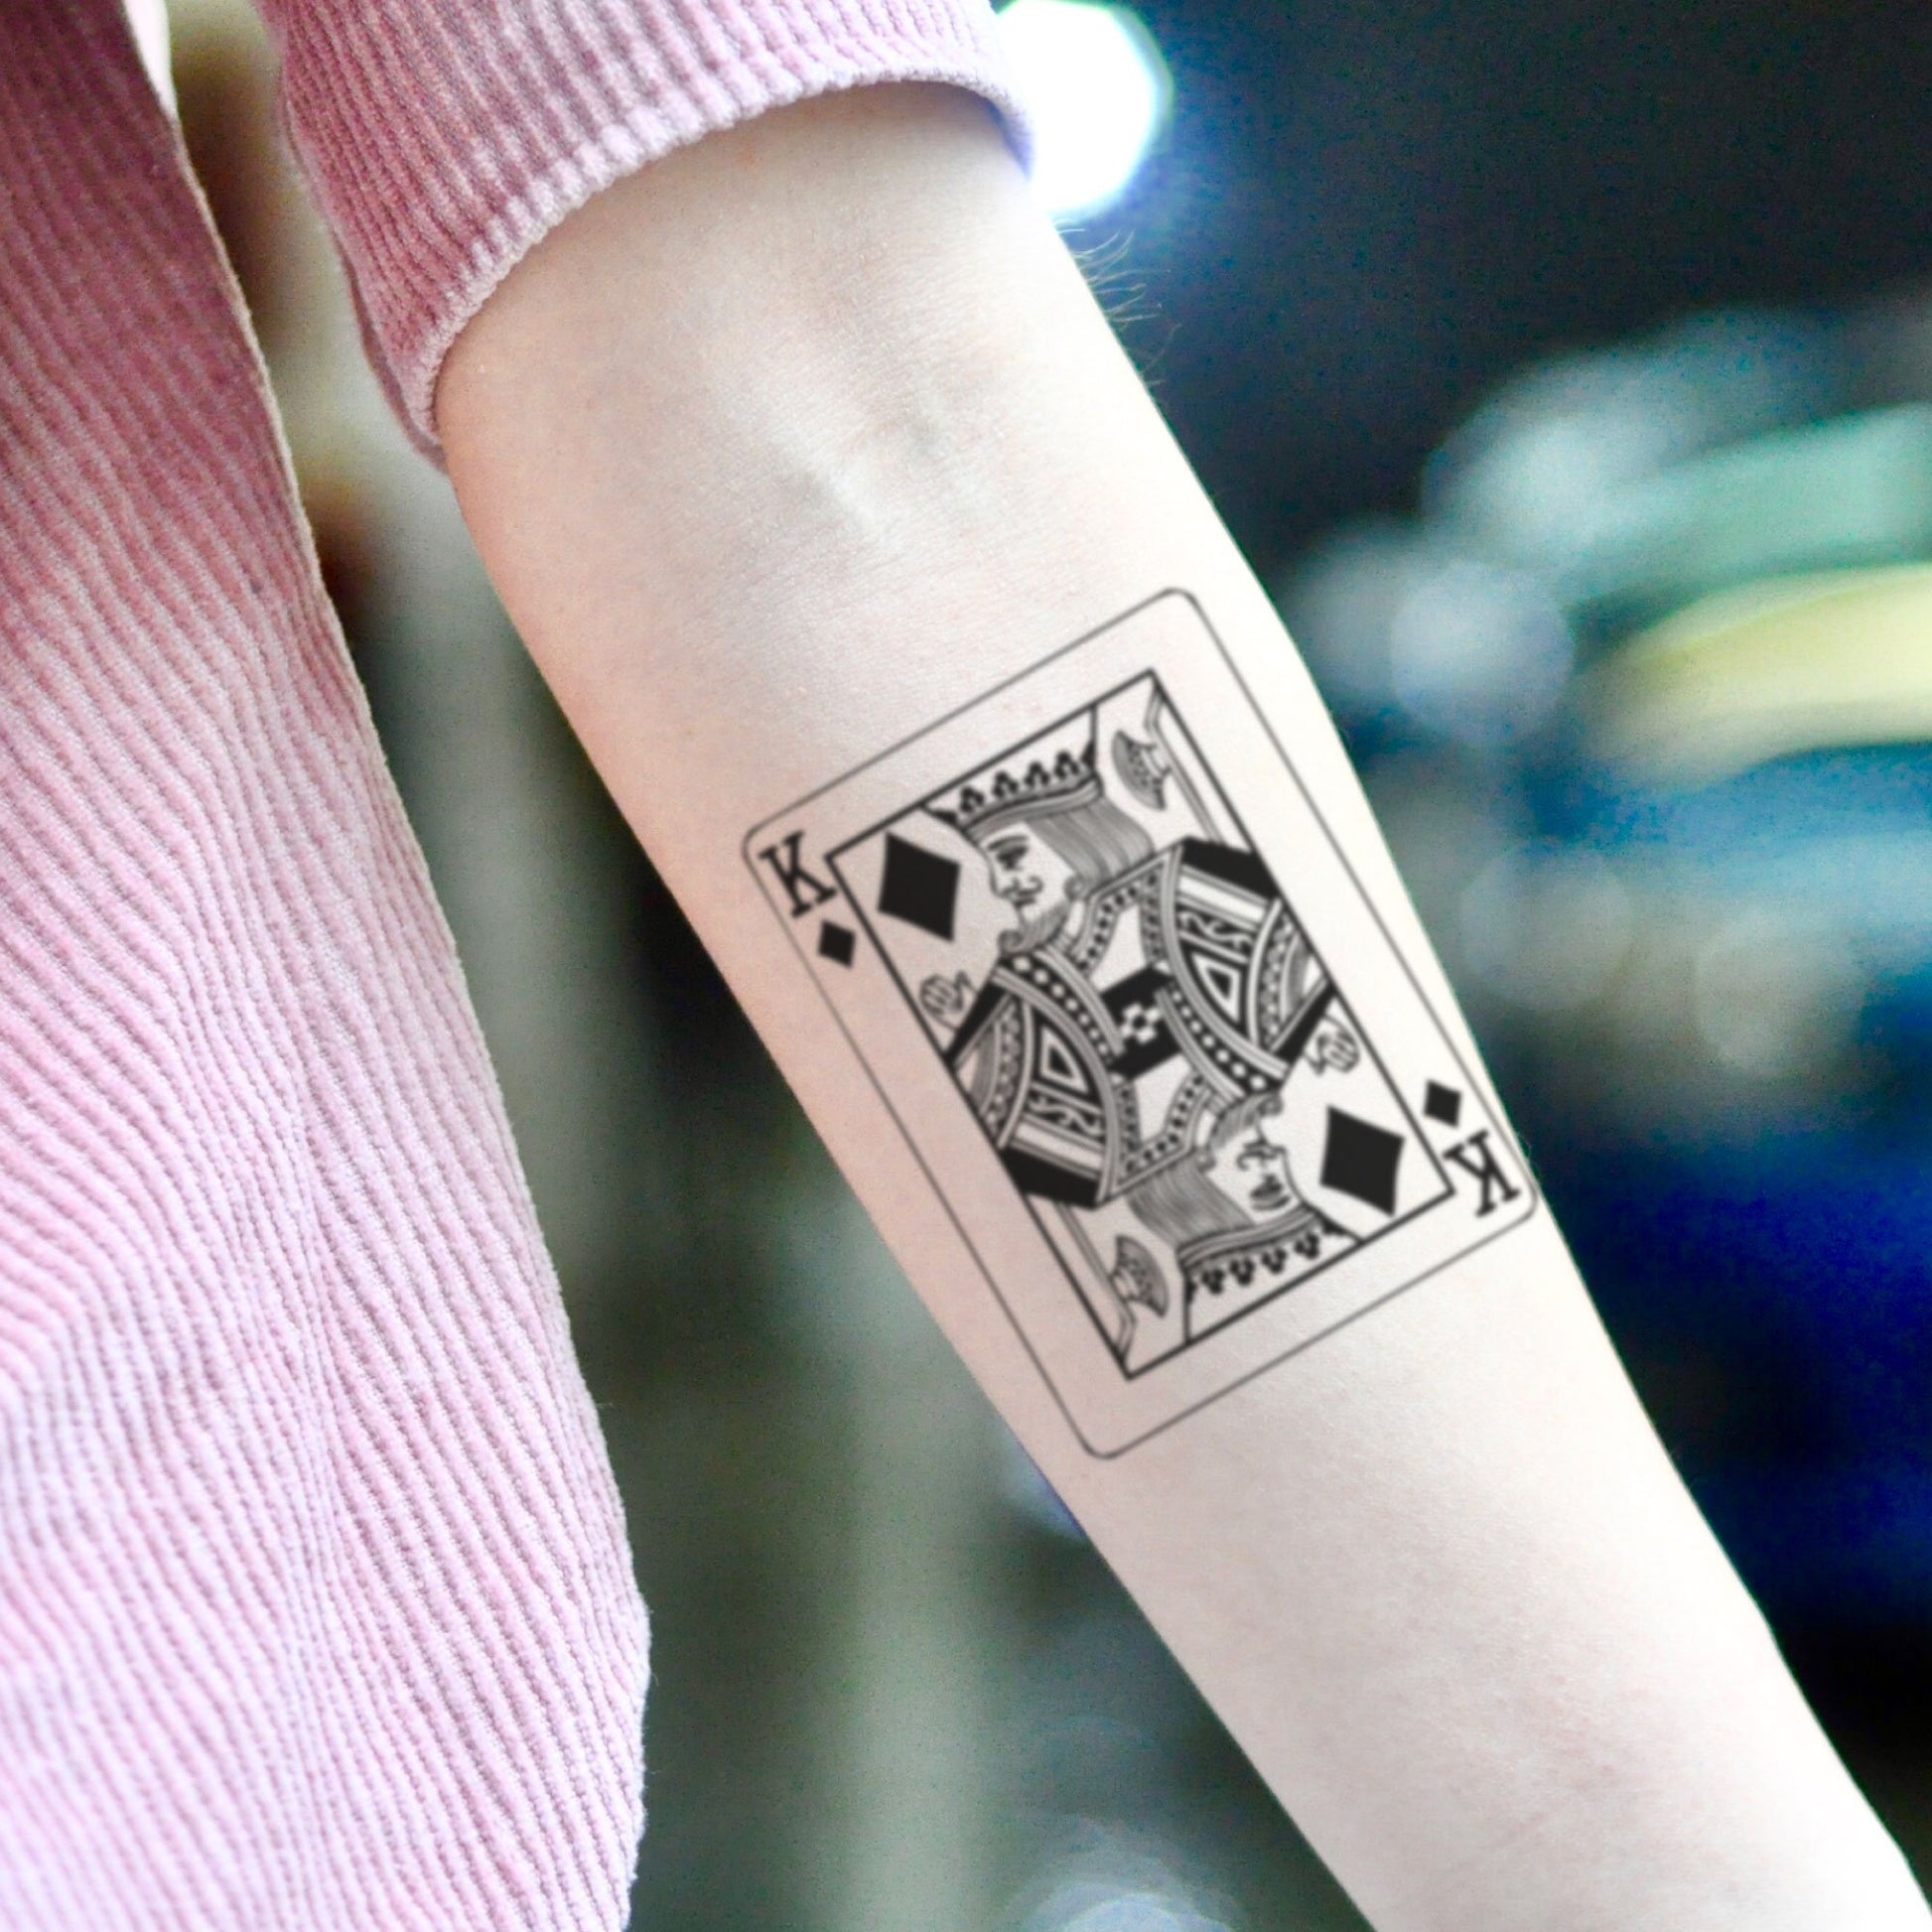 fake small king of diamonds playing card illustrative temporary tattoo sticker design idea on inner arm